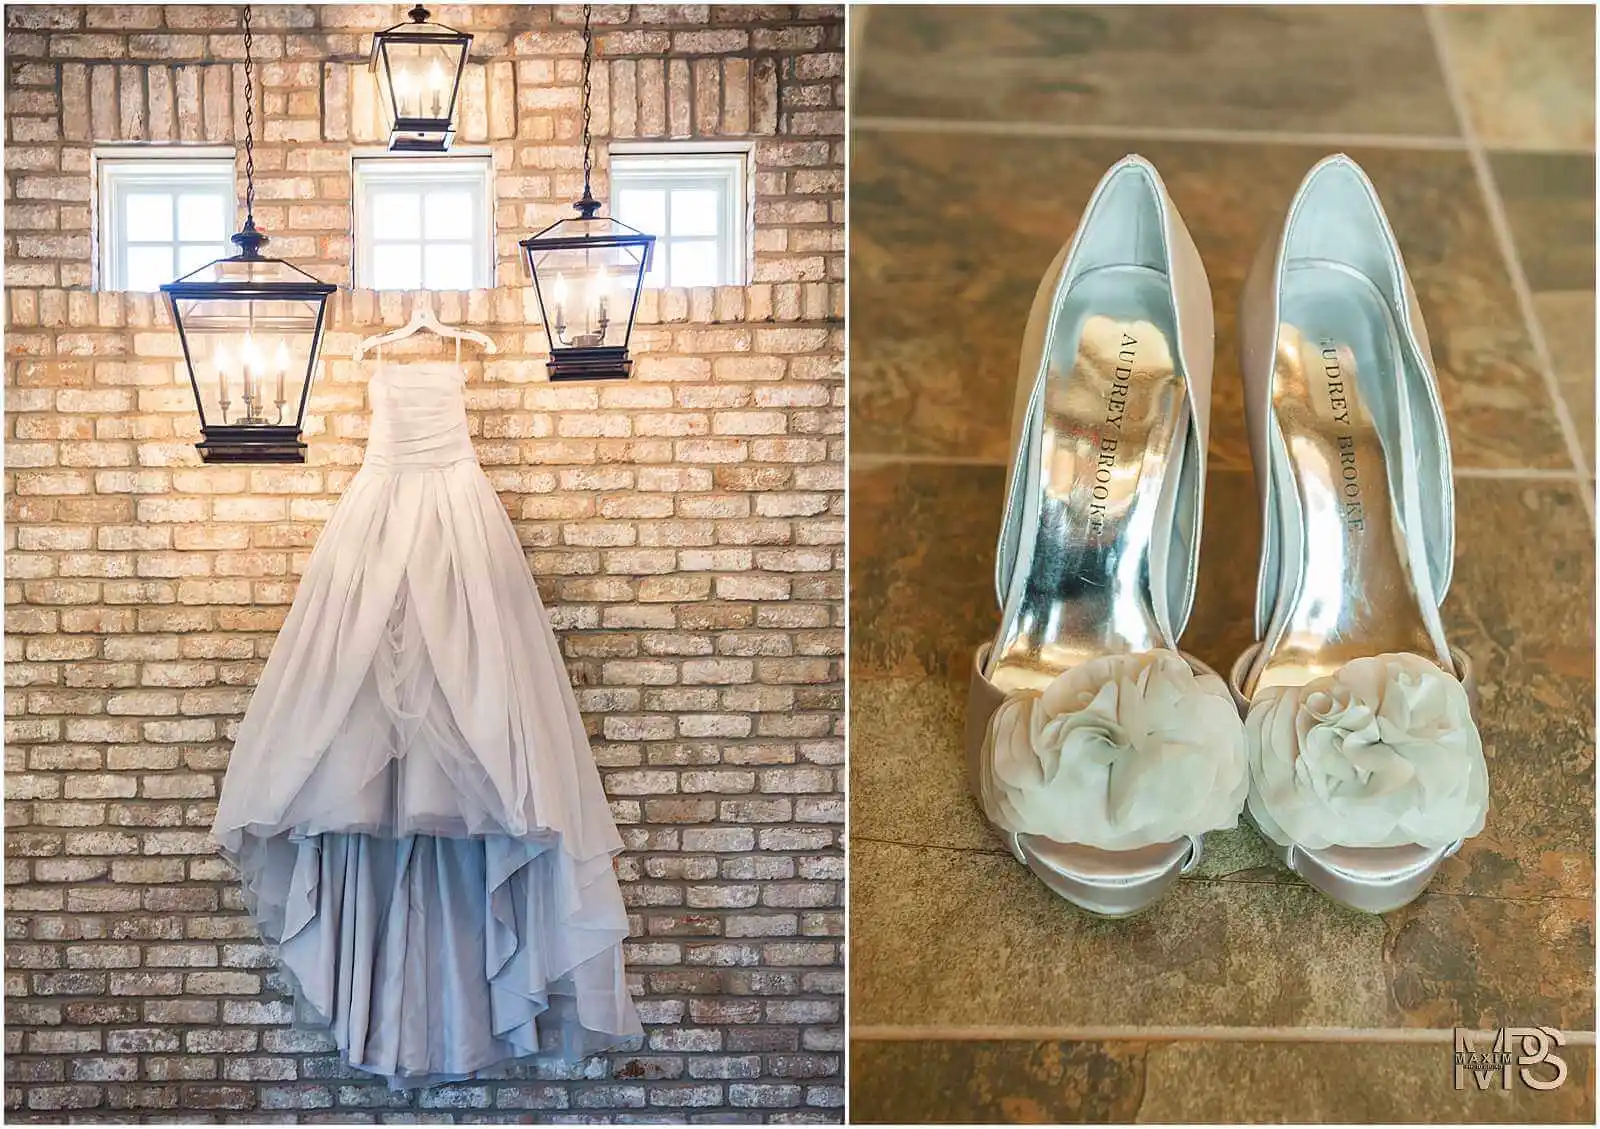 Manor House Ohio wedding dress and shoes